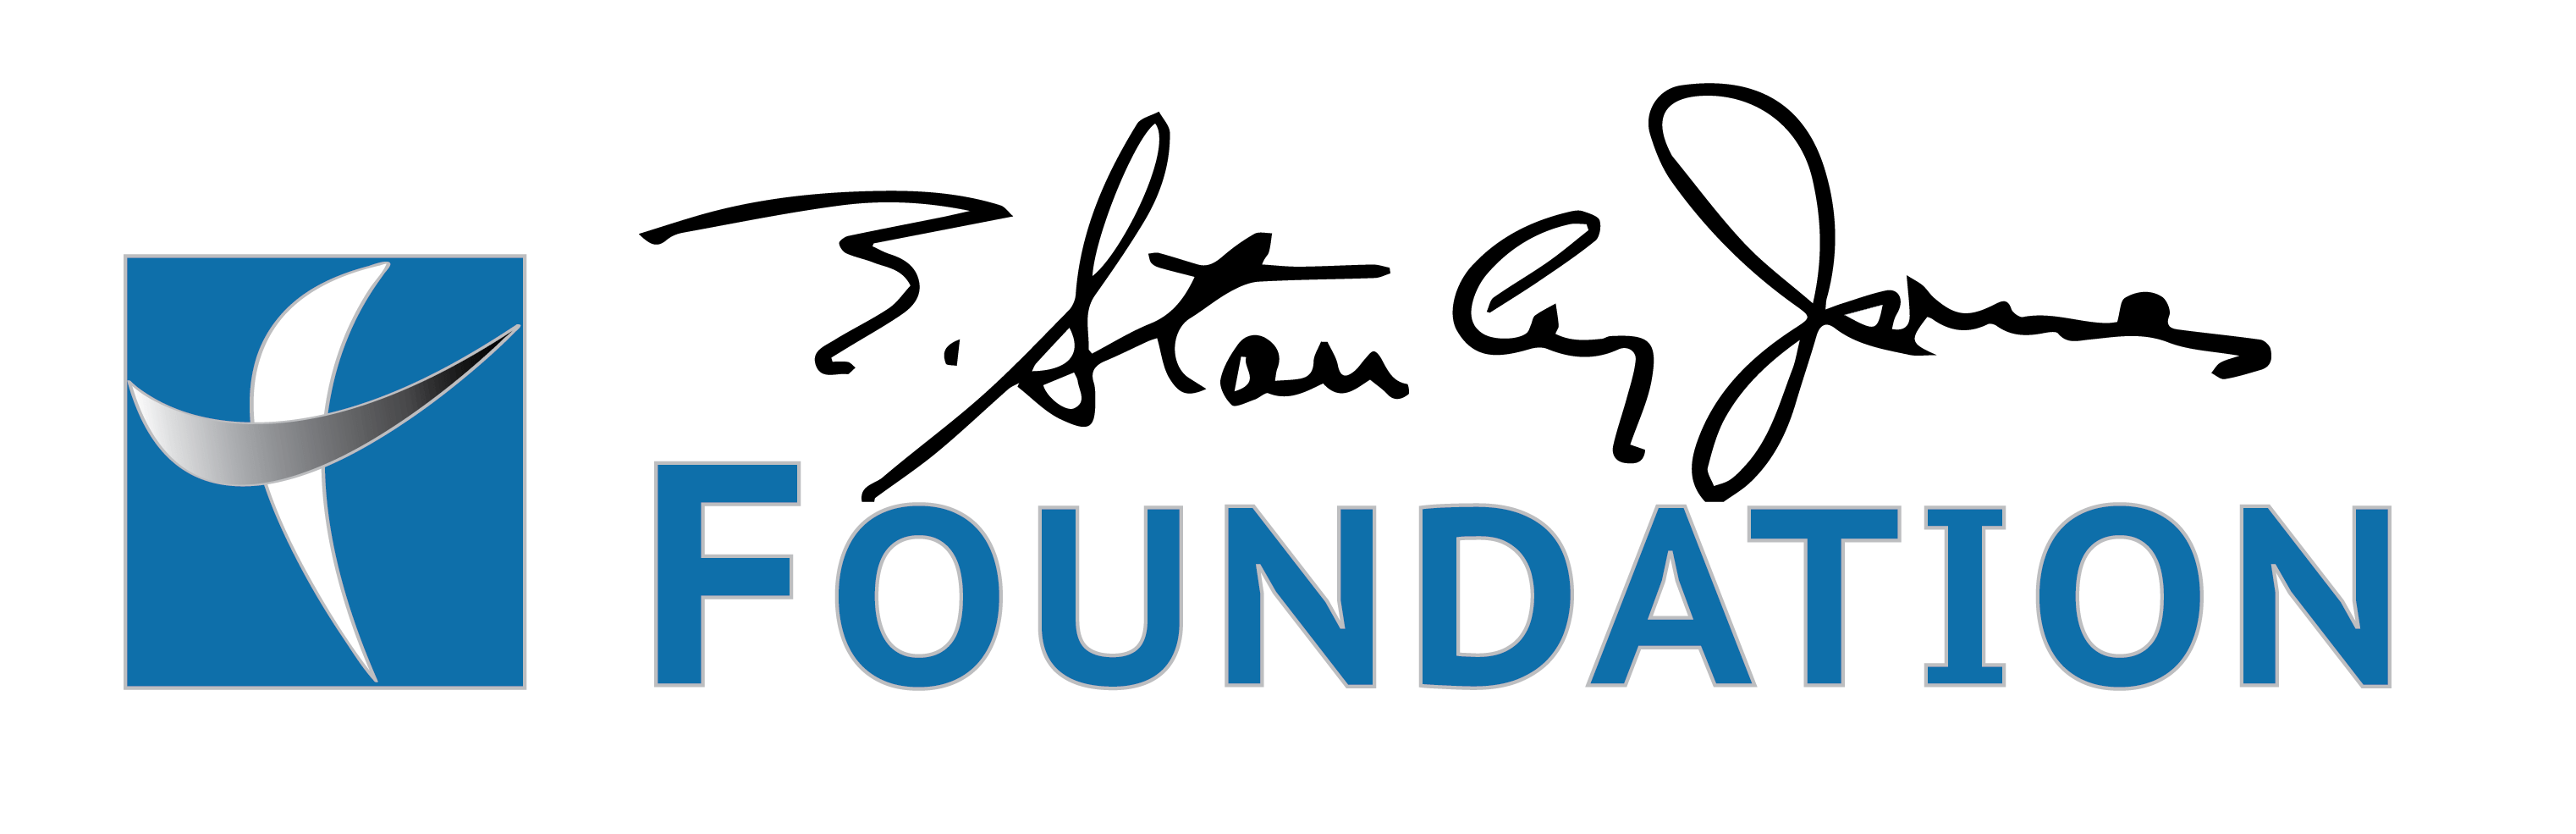 The E. Stanley Jones Foundation